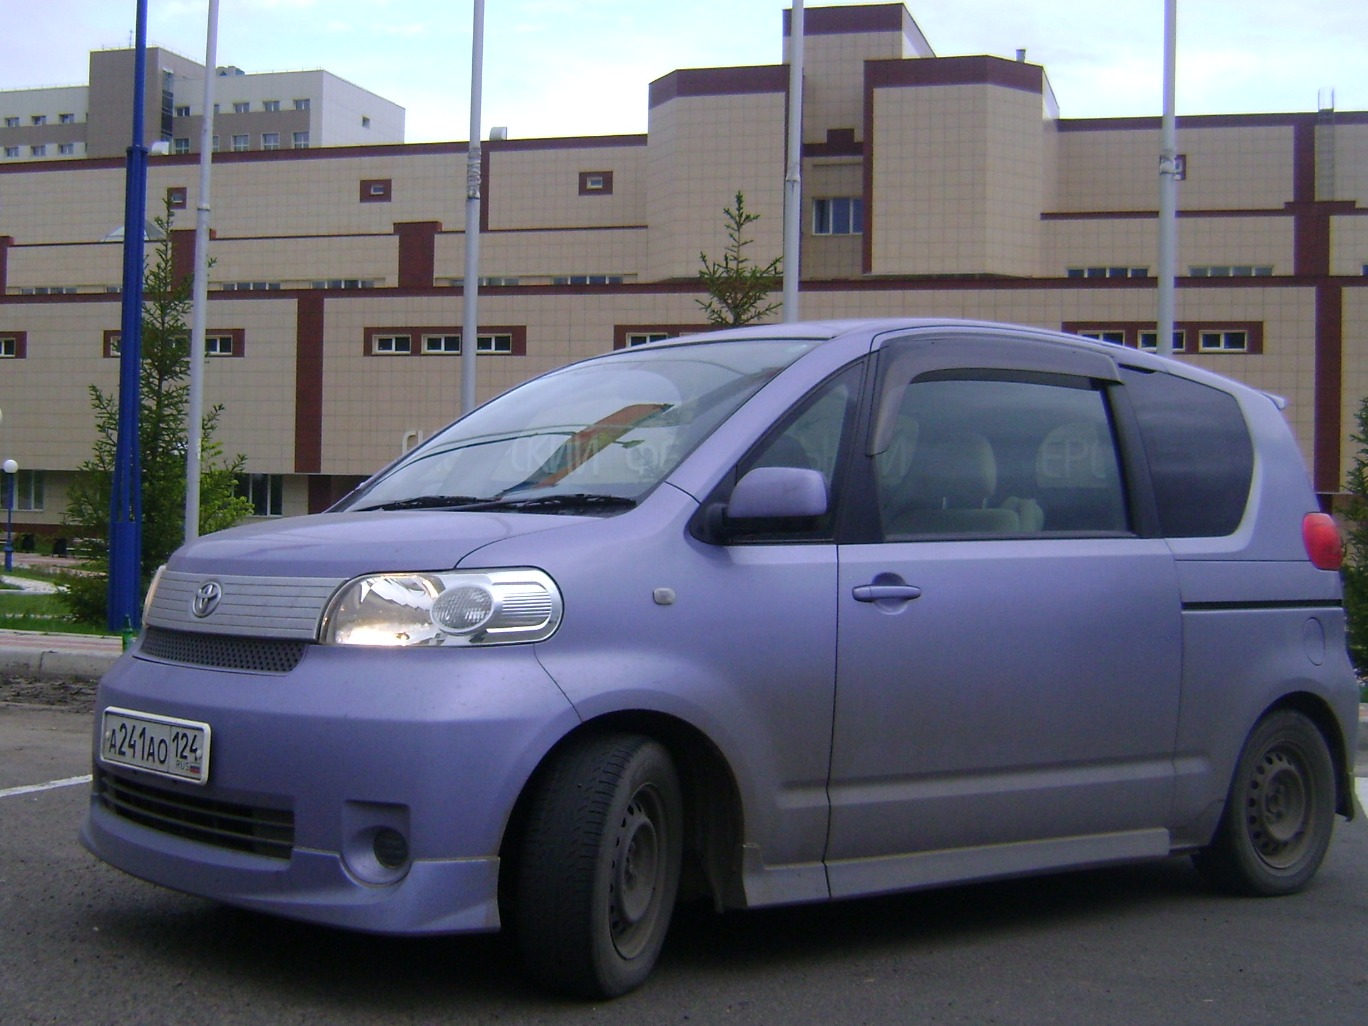    Toyota Porte 13 2005 